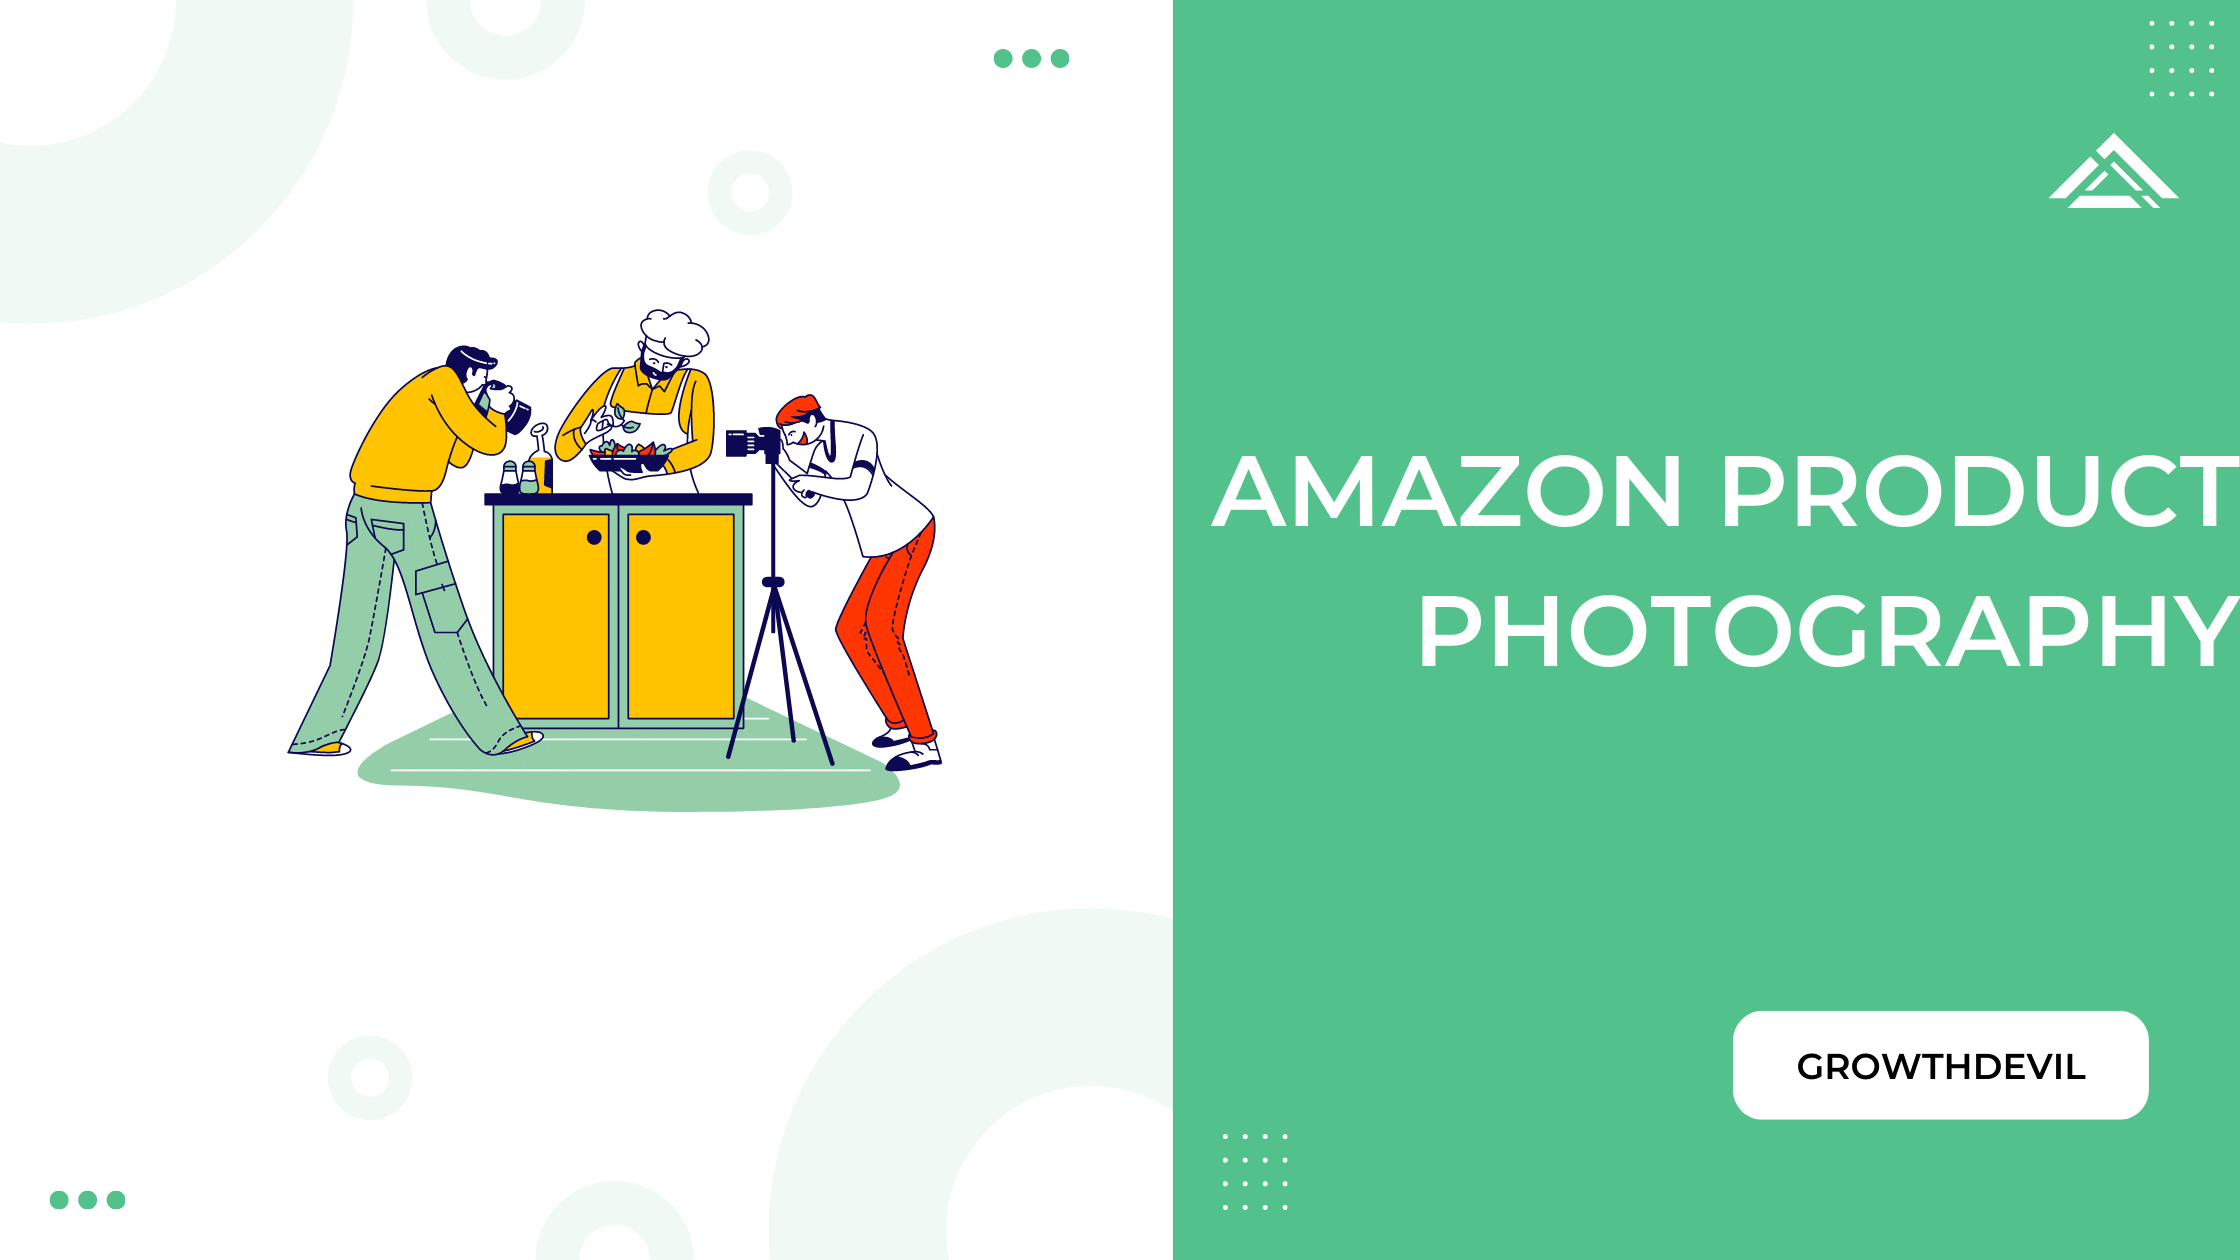 Amazon Product Photography - GrowthDevil